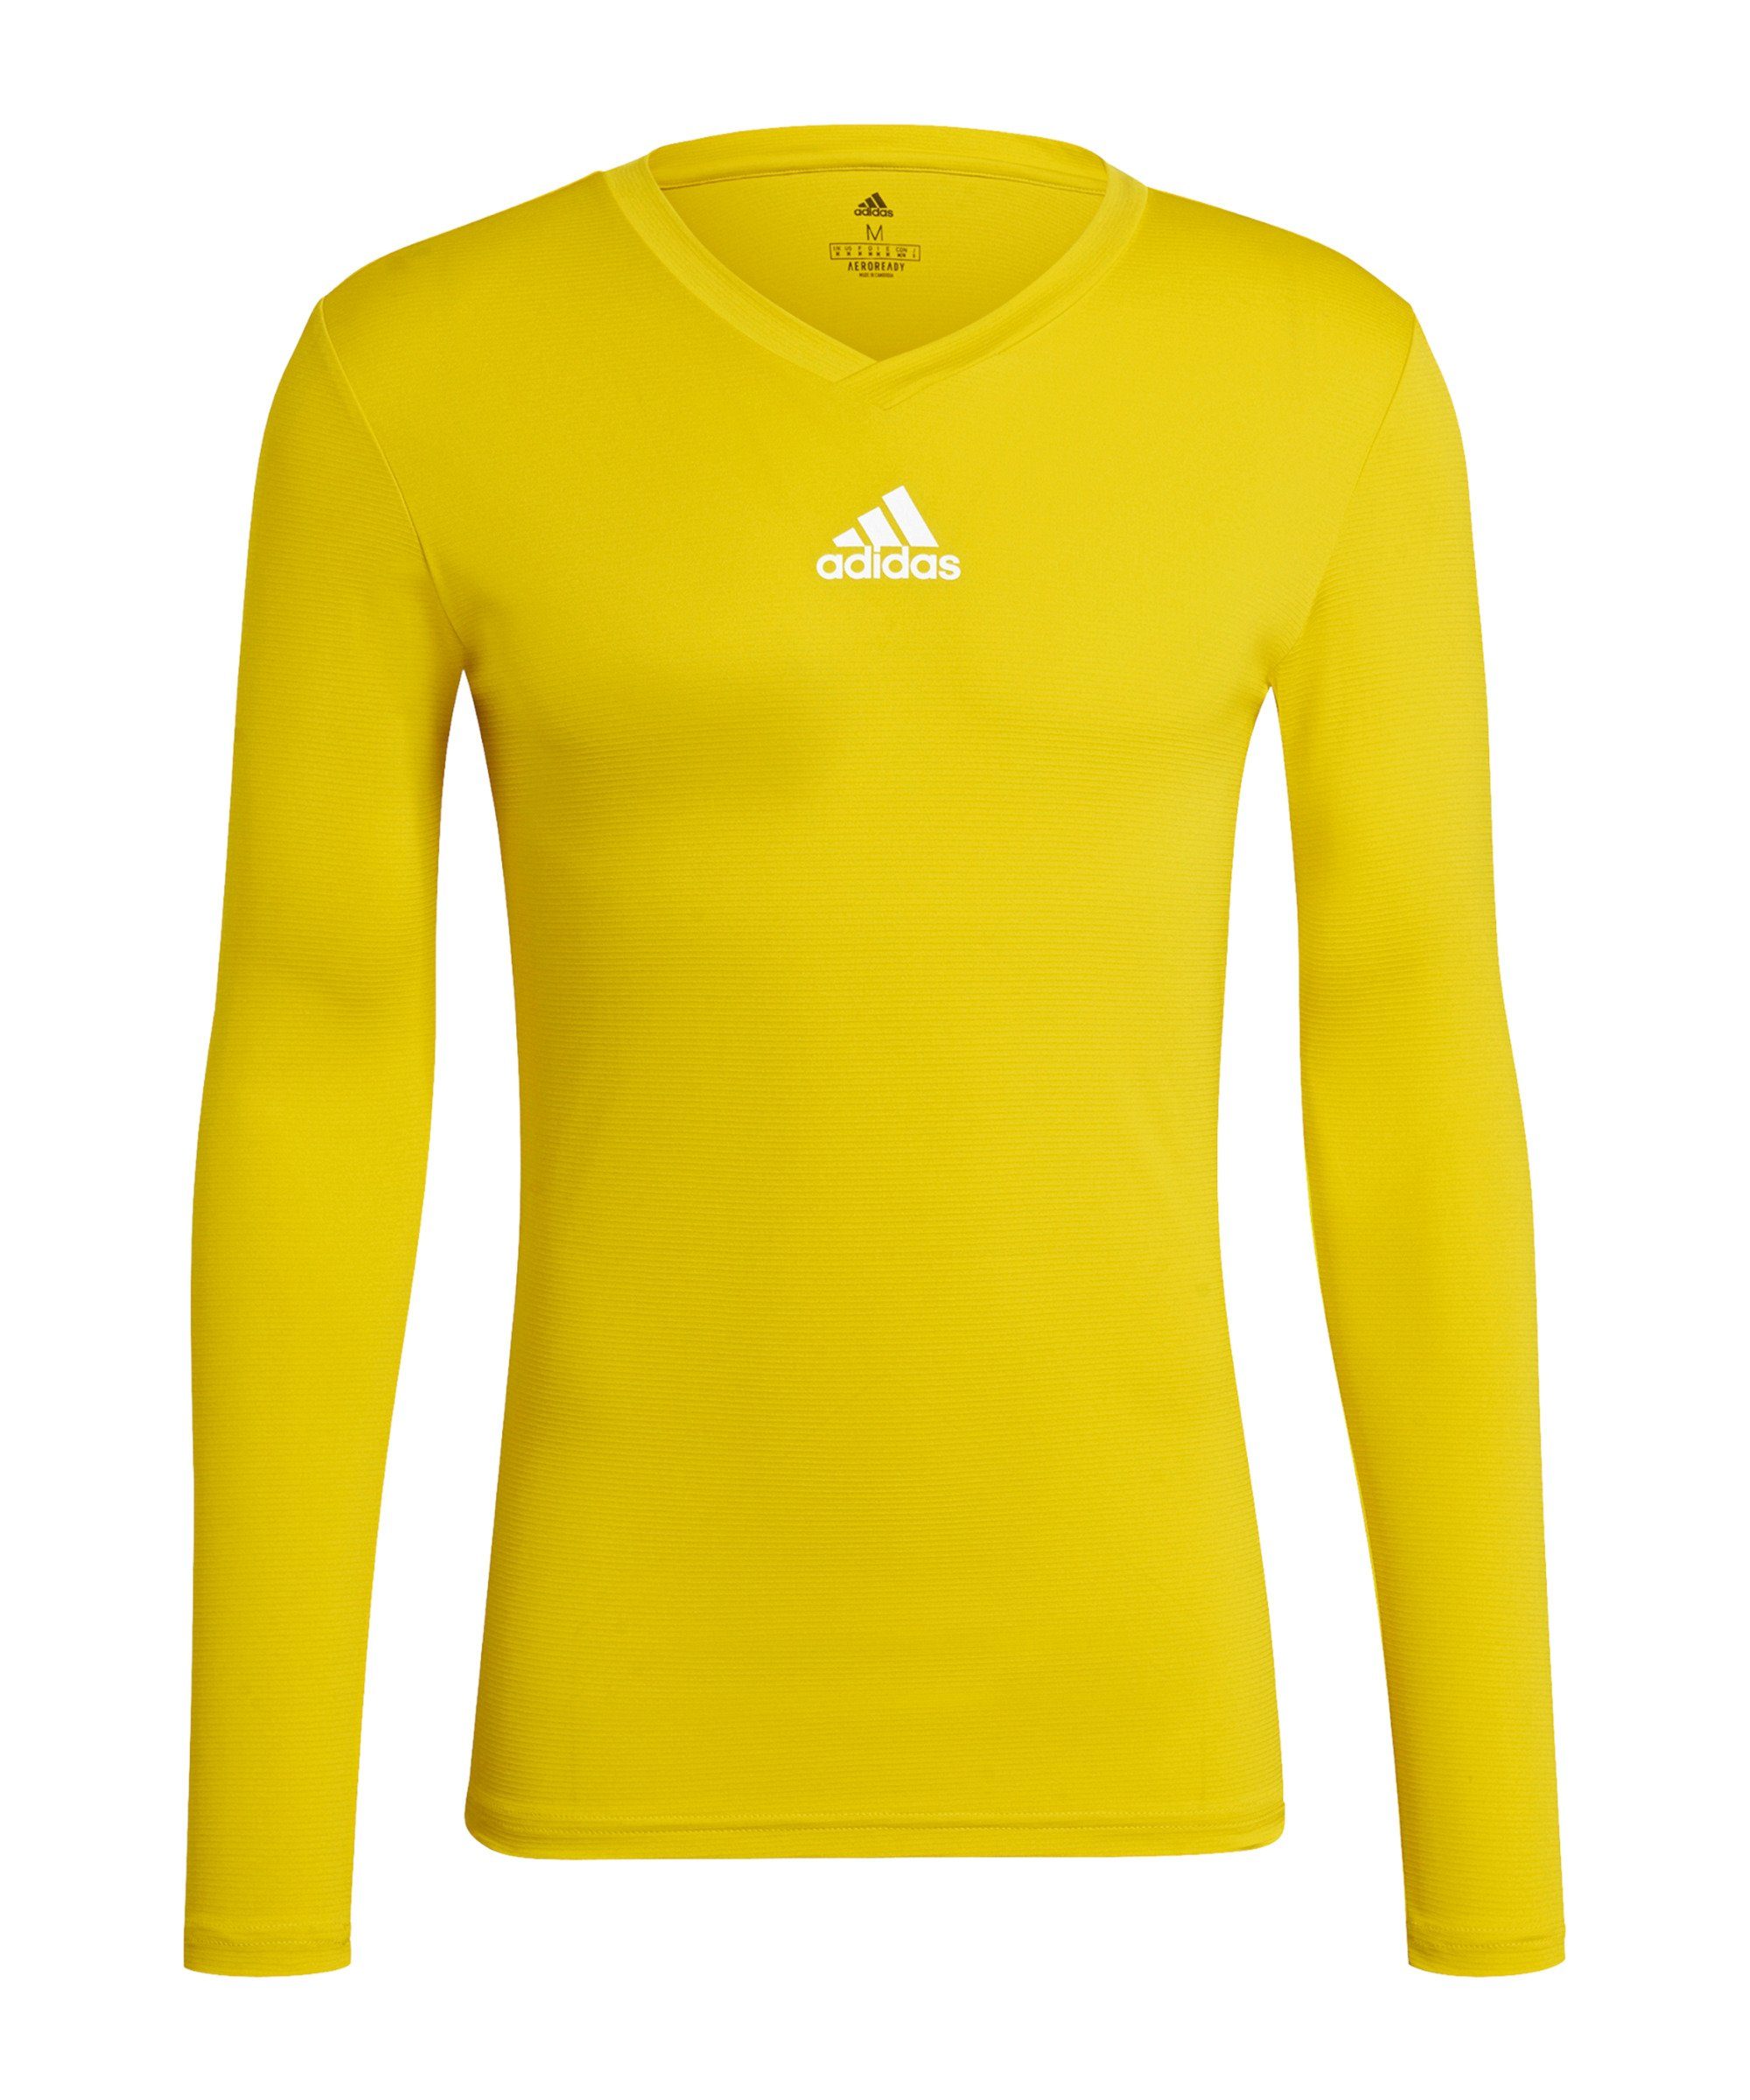 adidas Performance Funktionsshirt Team Base Top langarm Nachhaltiges Produkt gelb